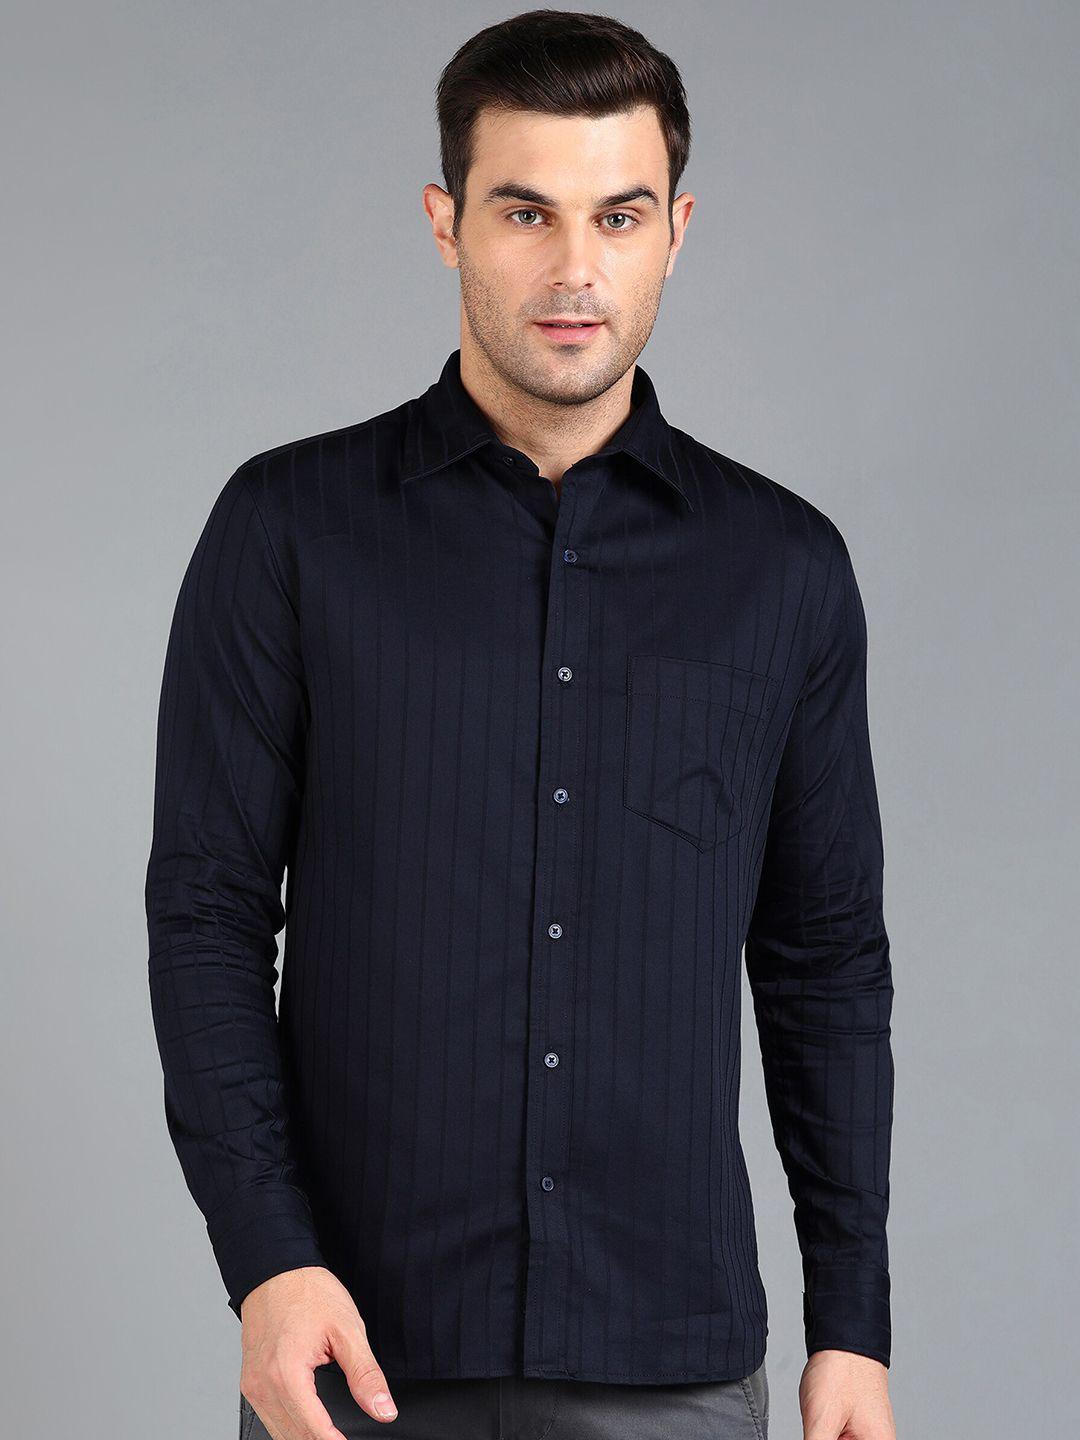 znx clothing men blue premium slim fit opaque striped formal shirt